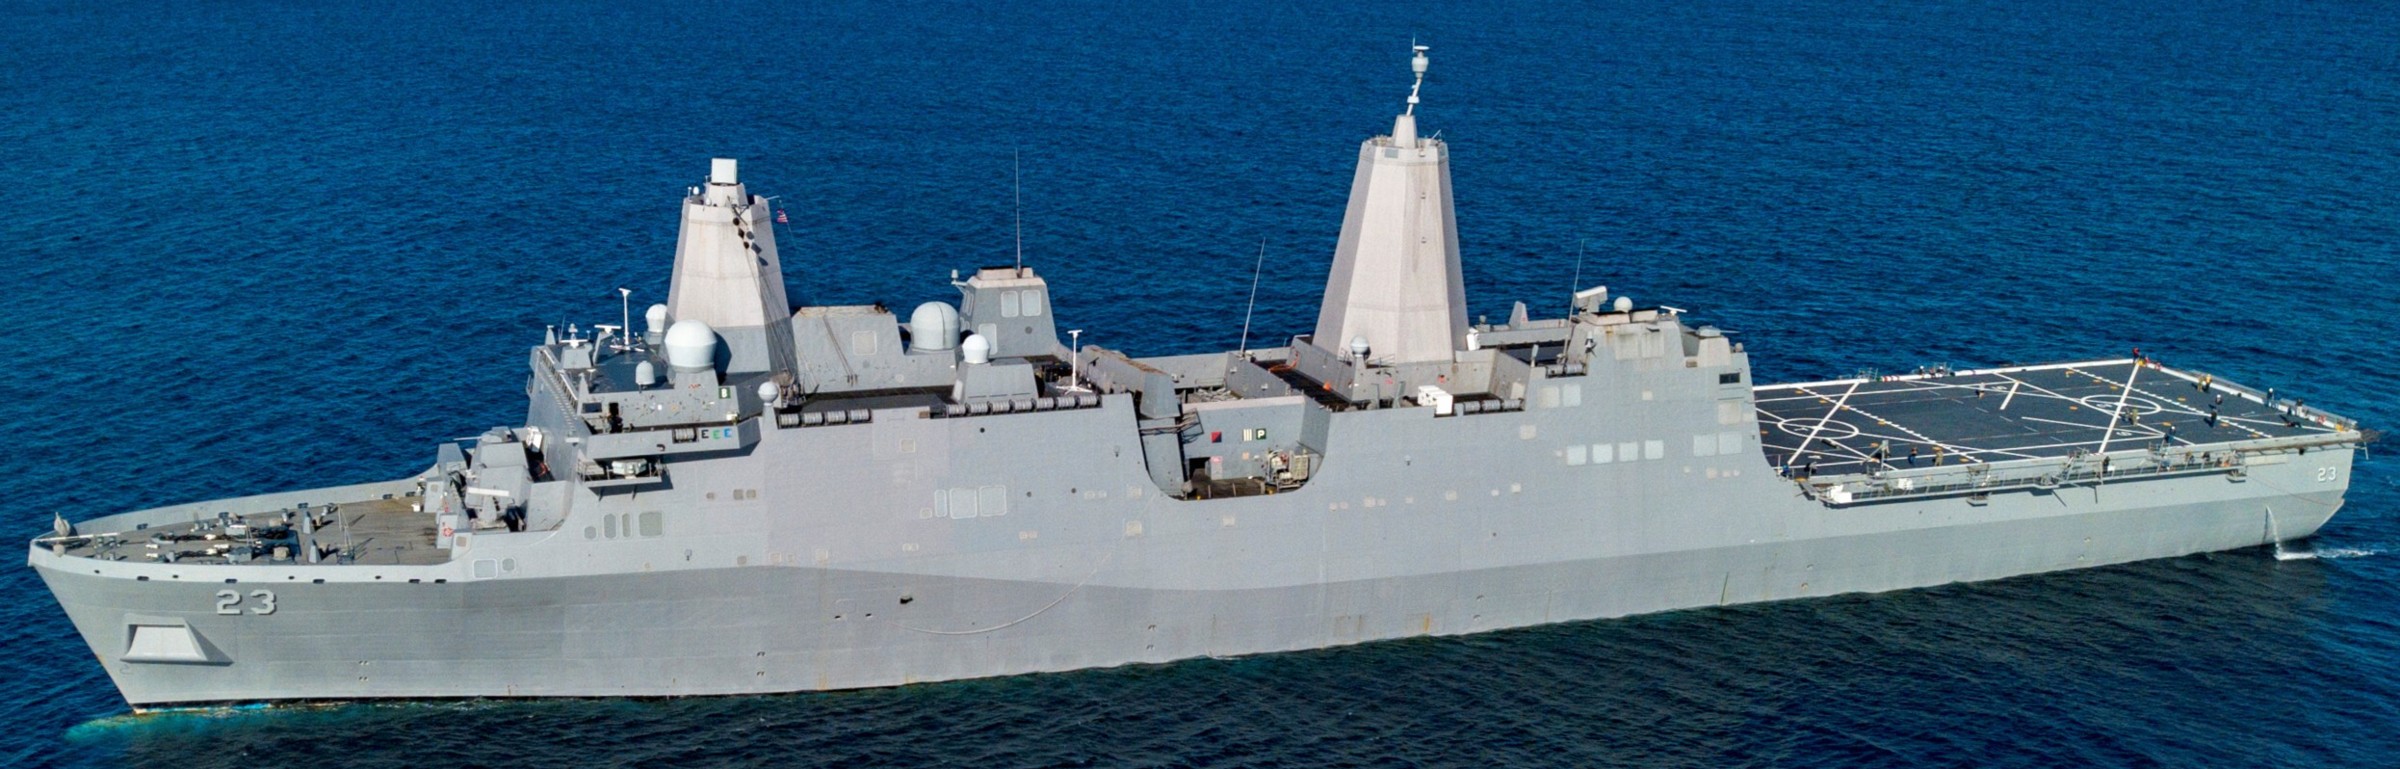 lpd-23 uss anchorage san antonio class amphibious transport dock ship navy 16